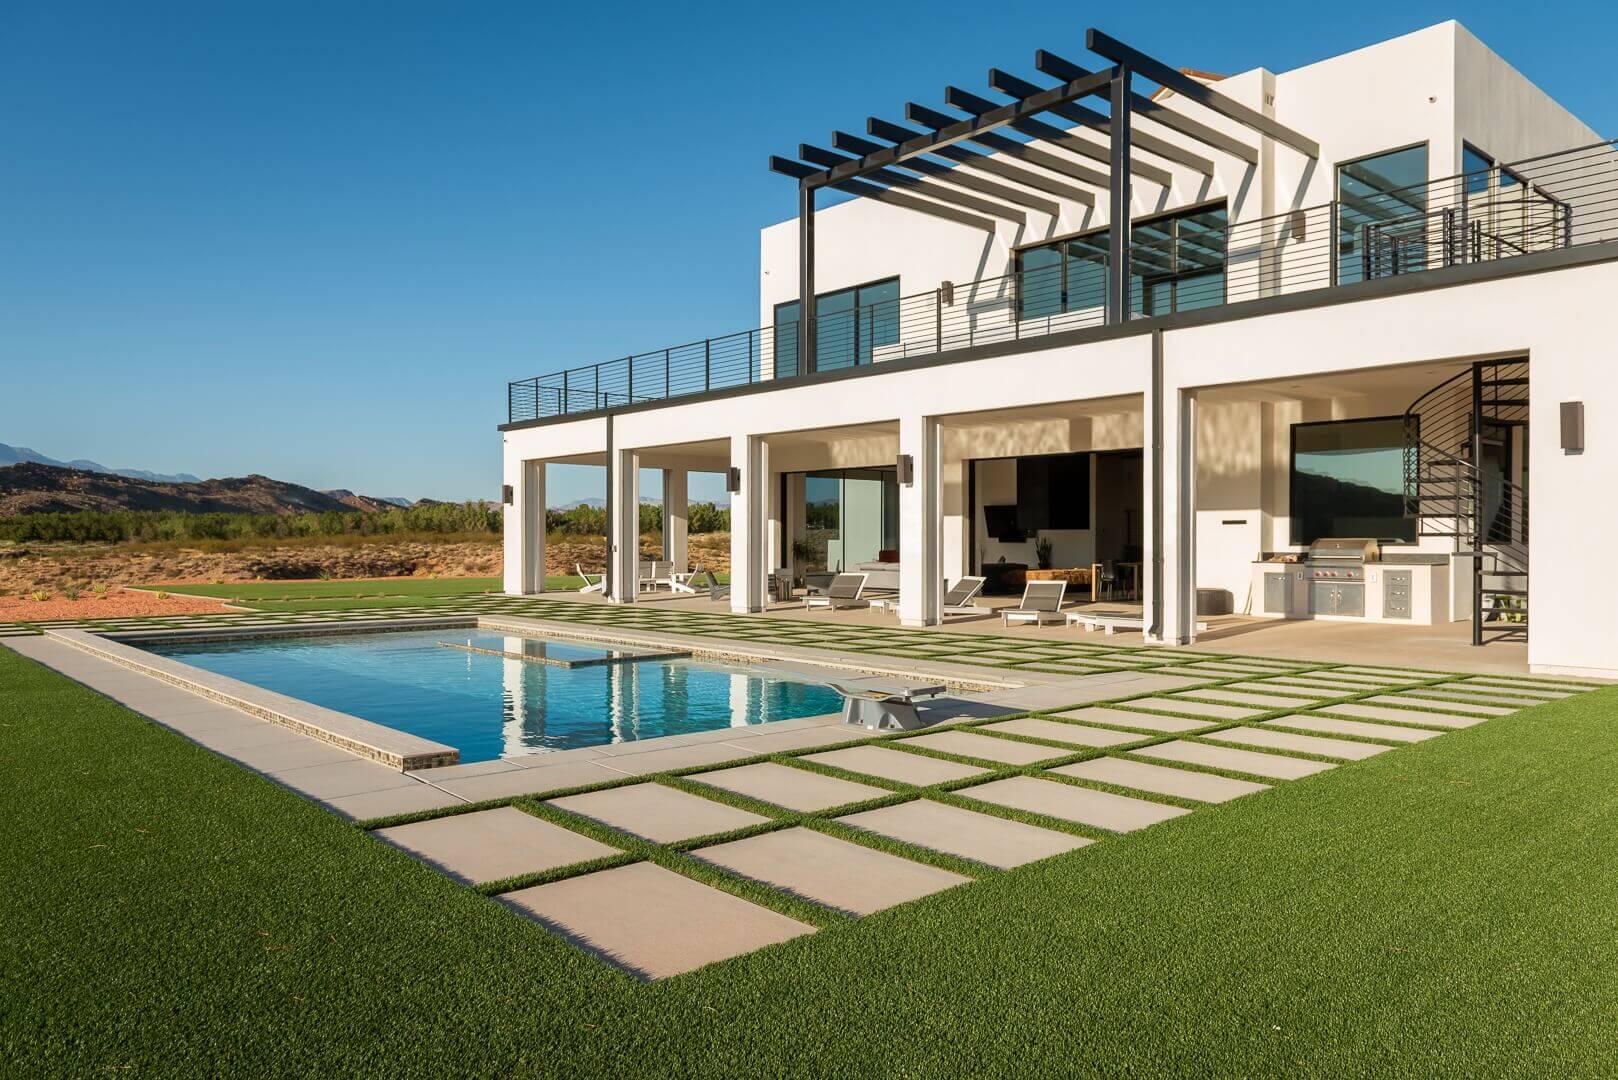 St. George Outdoor Pool Design - Custom Home Exterior by Dennis Miller